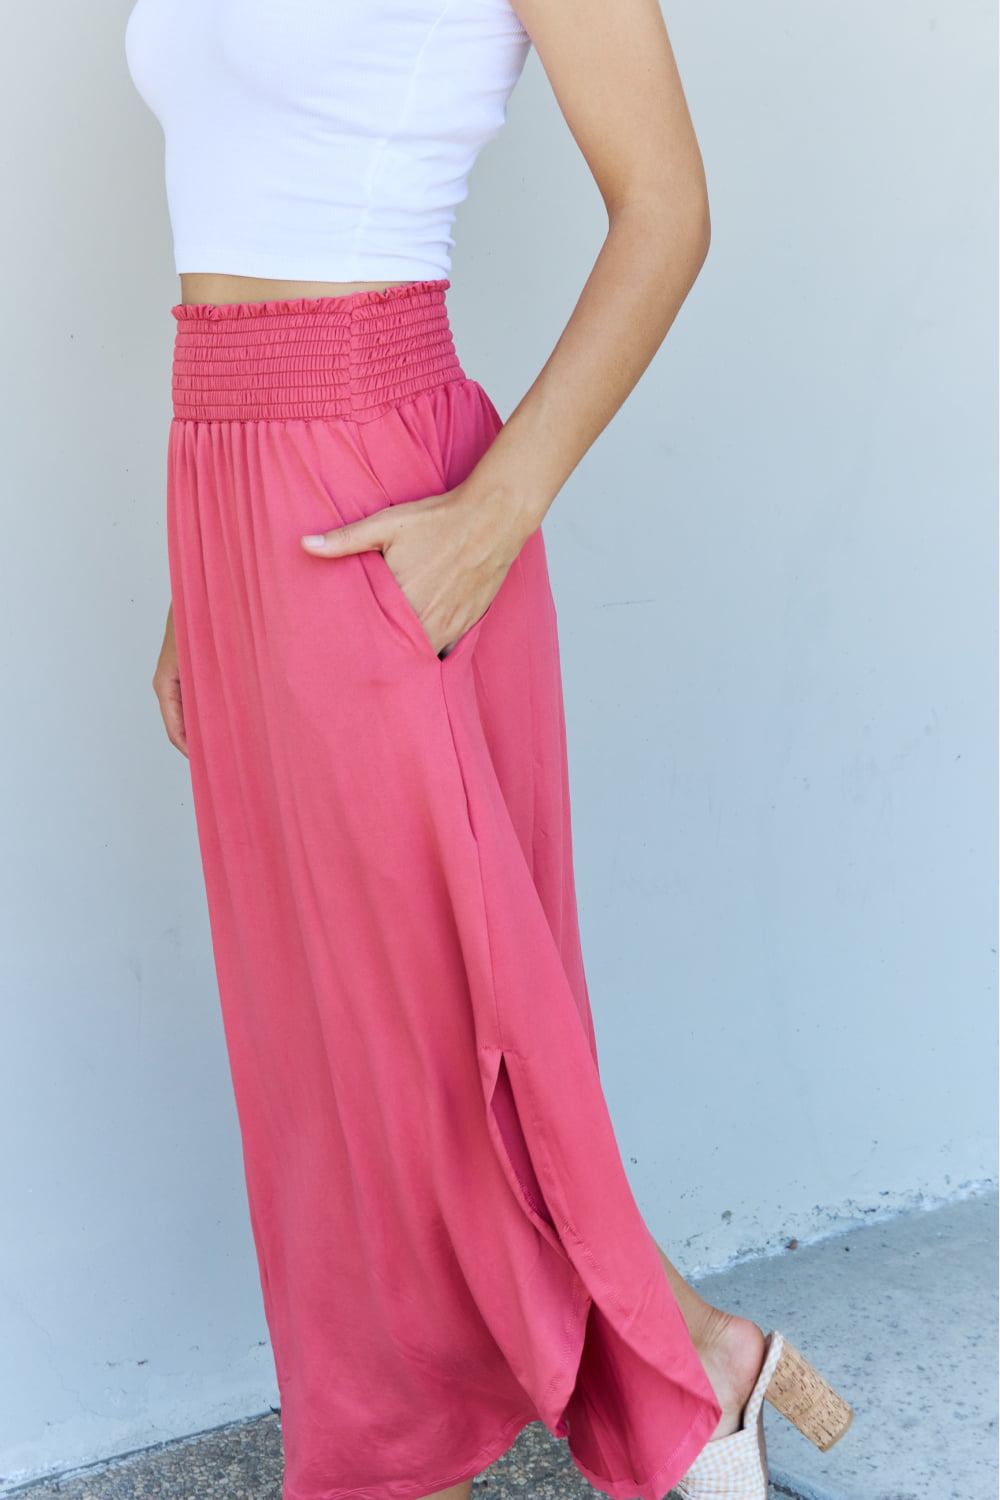 Doublju Comfort Princess Full Size High Waist Scoop Hem Maxi Skirt in Hot Pink